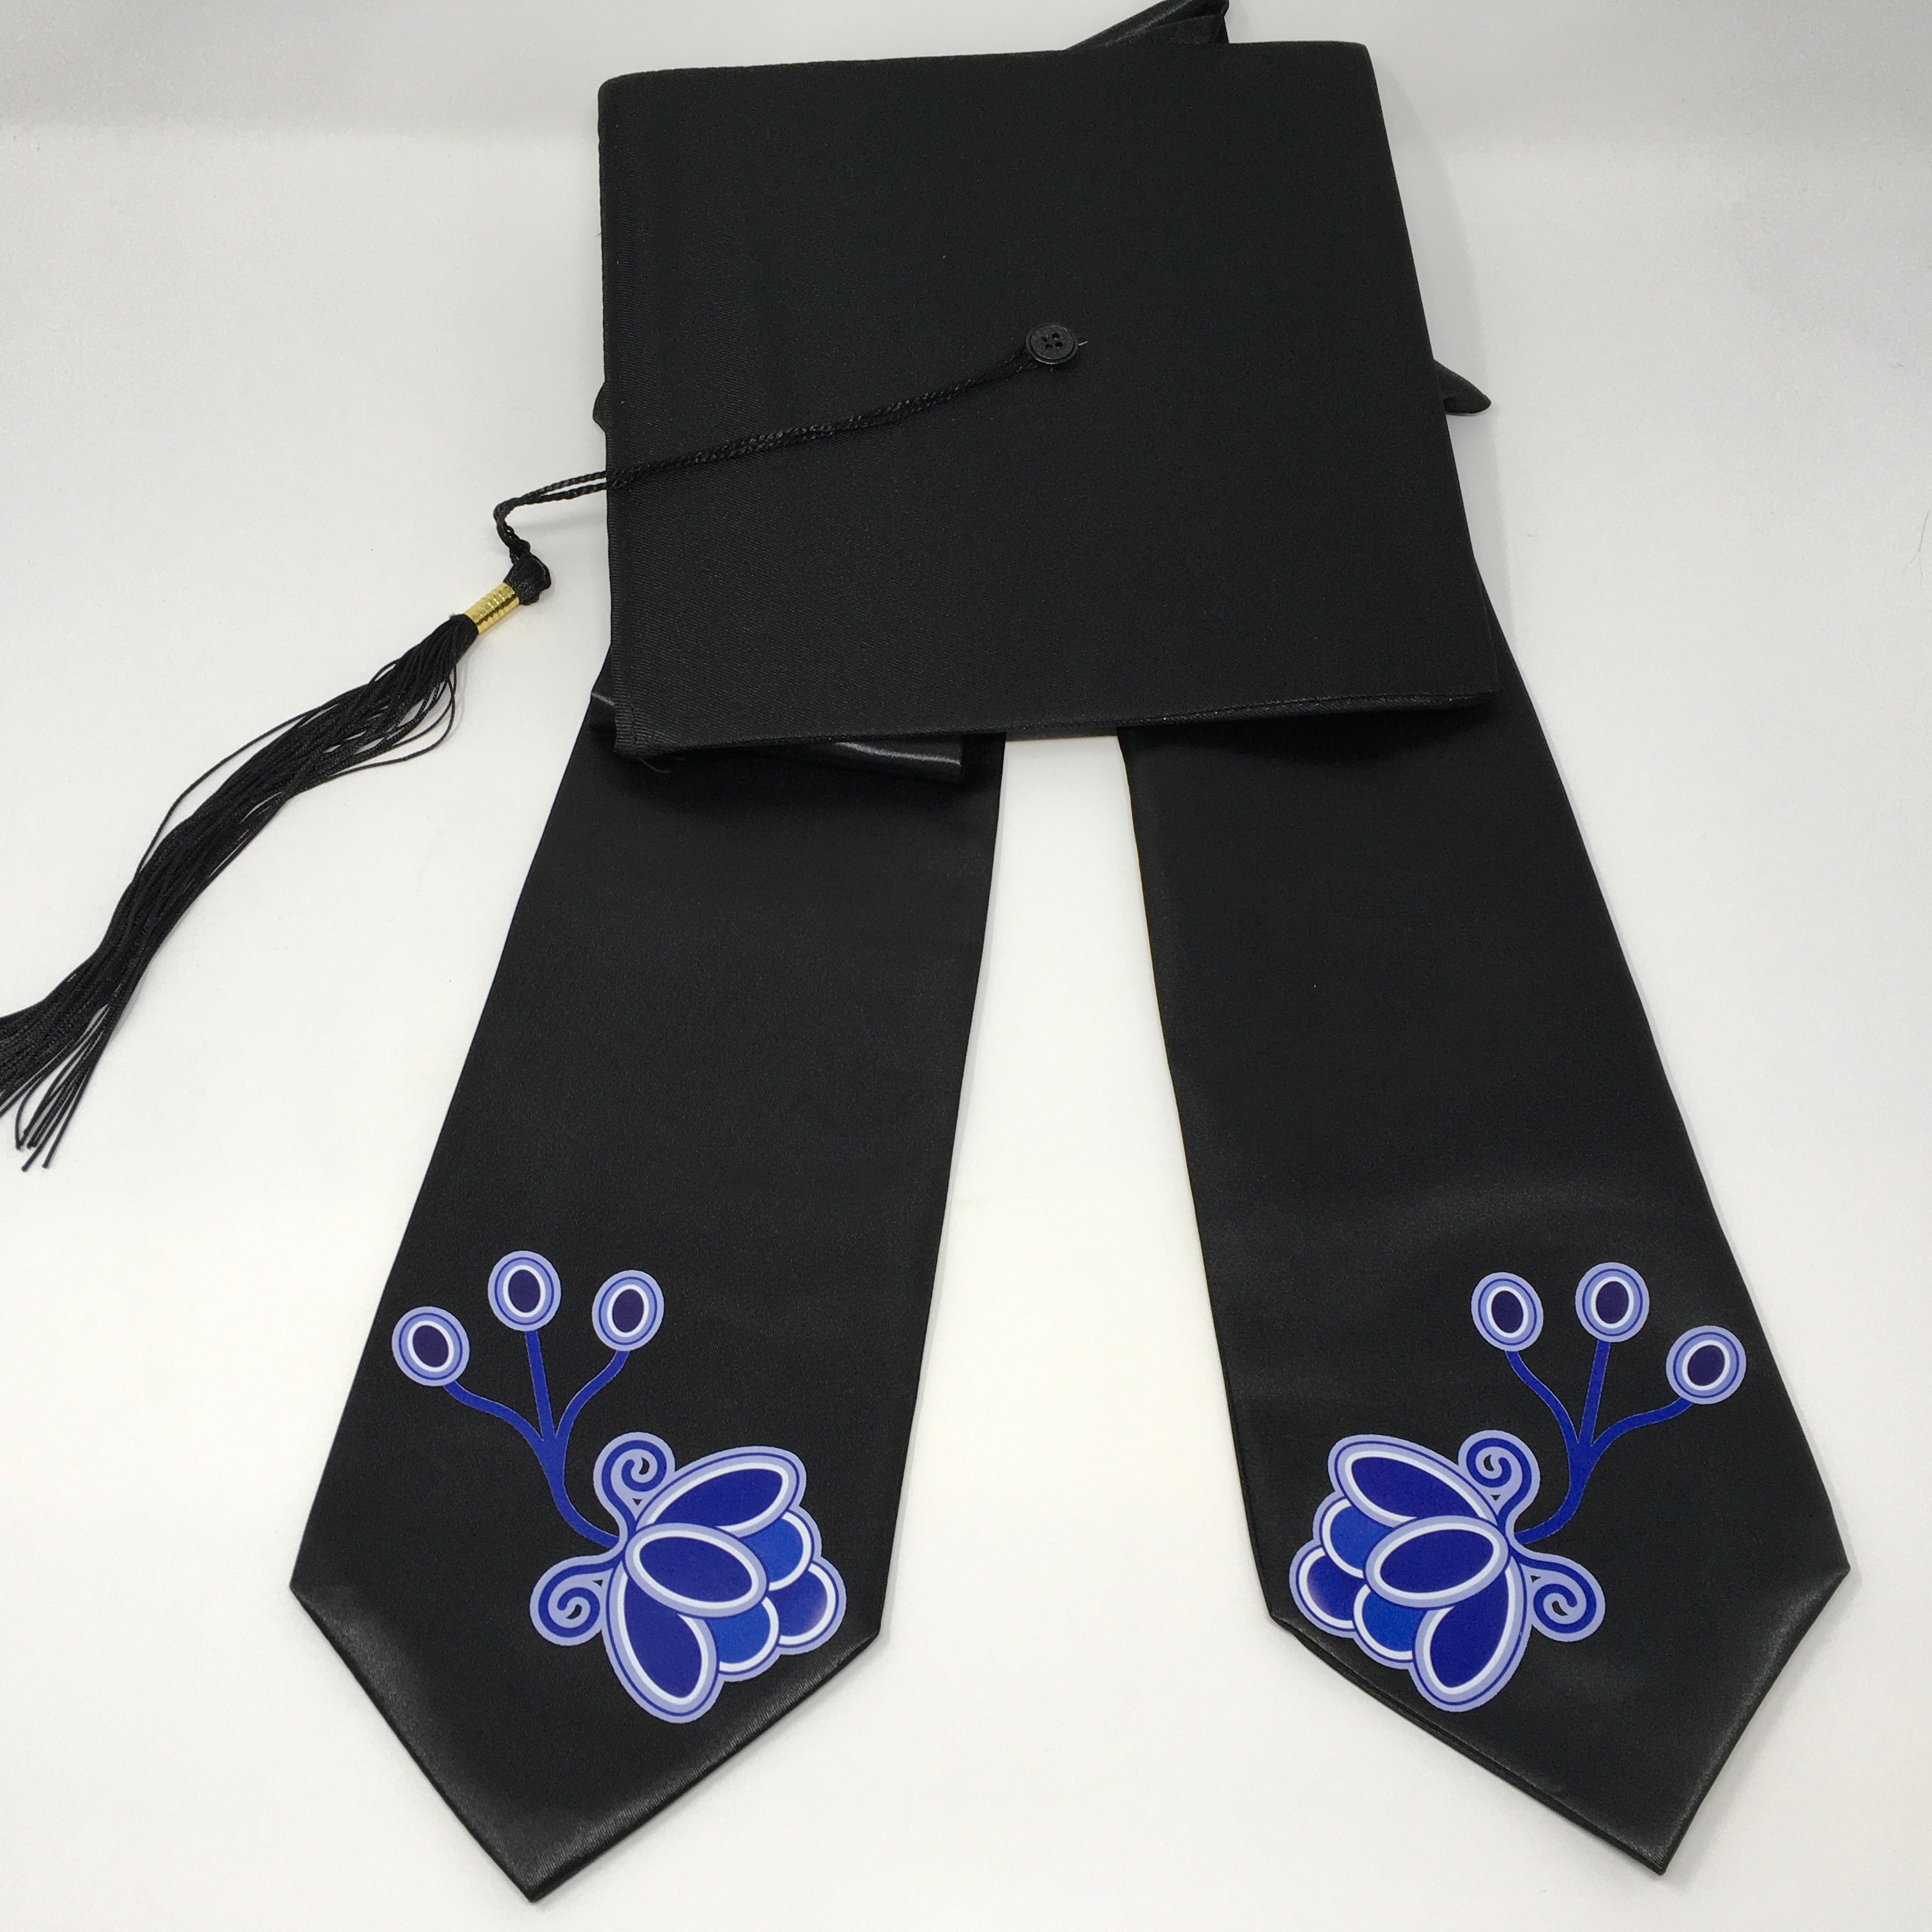 Black Graduation Stole with Blue Floral Amour Flower